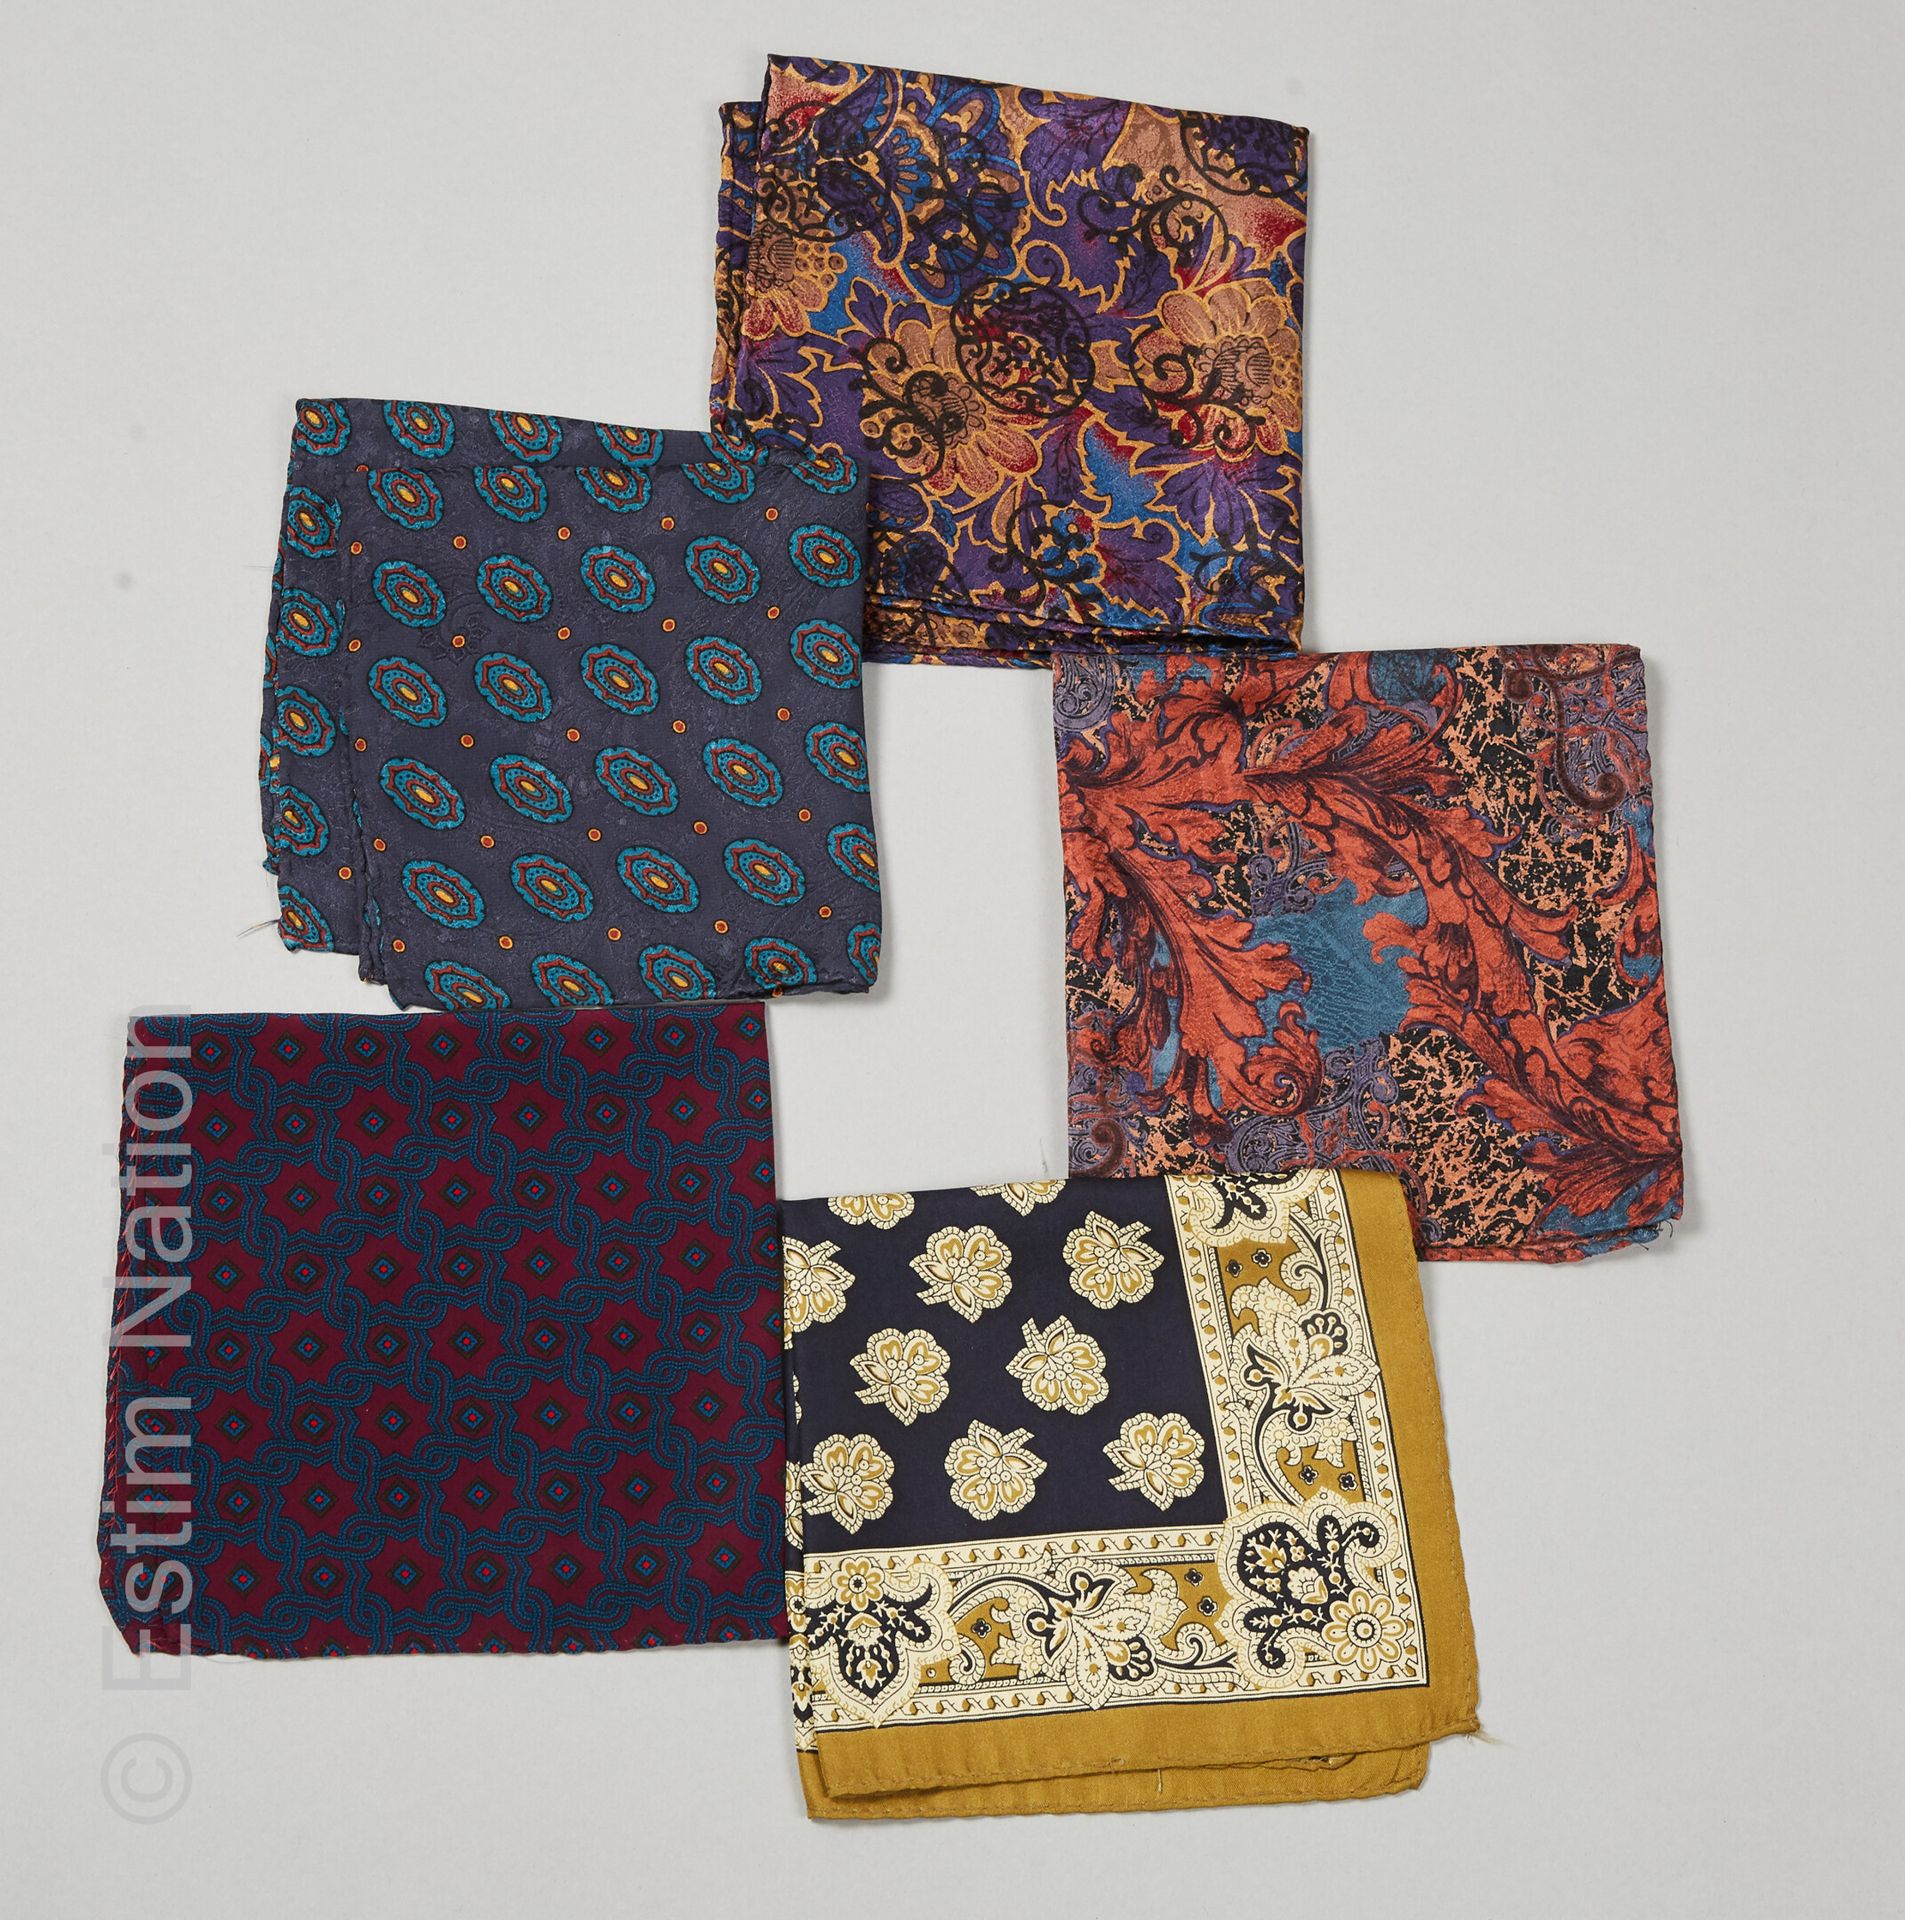 CERRUTTI 1881, GIANFRANCO FERRE, ANONYME 五个口袋，有各种印刷的丝绸（不保证状态）。